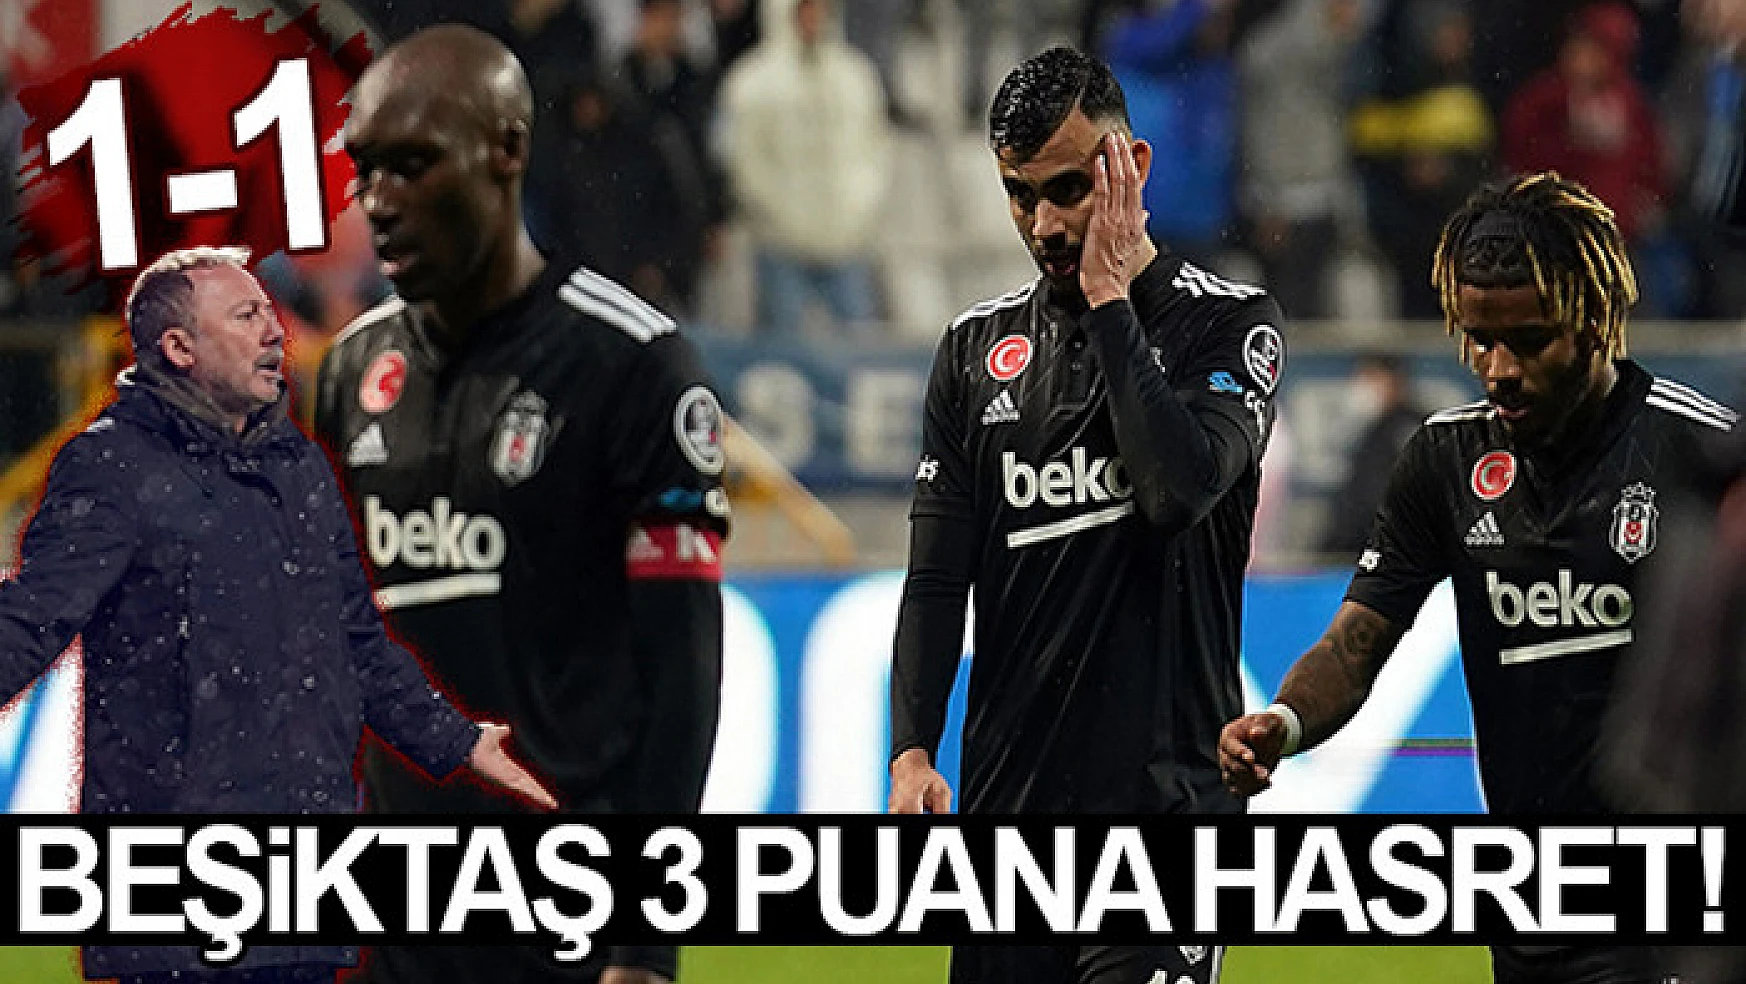 Beşiktaş 3 puana hasret!